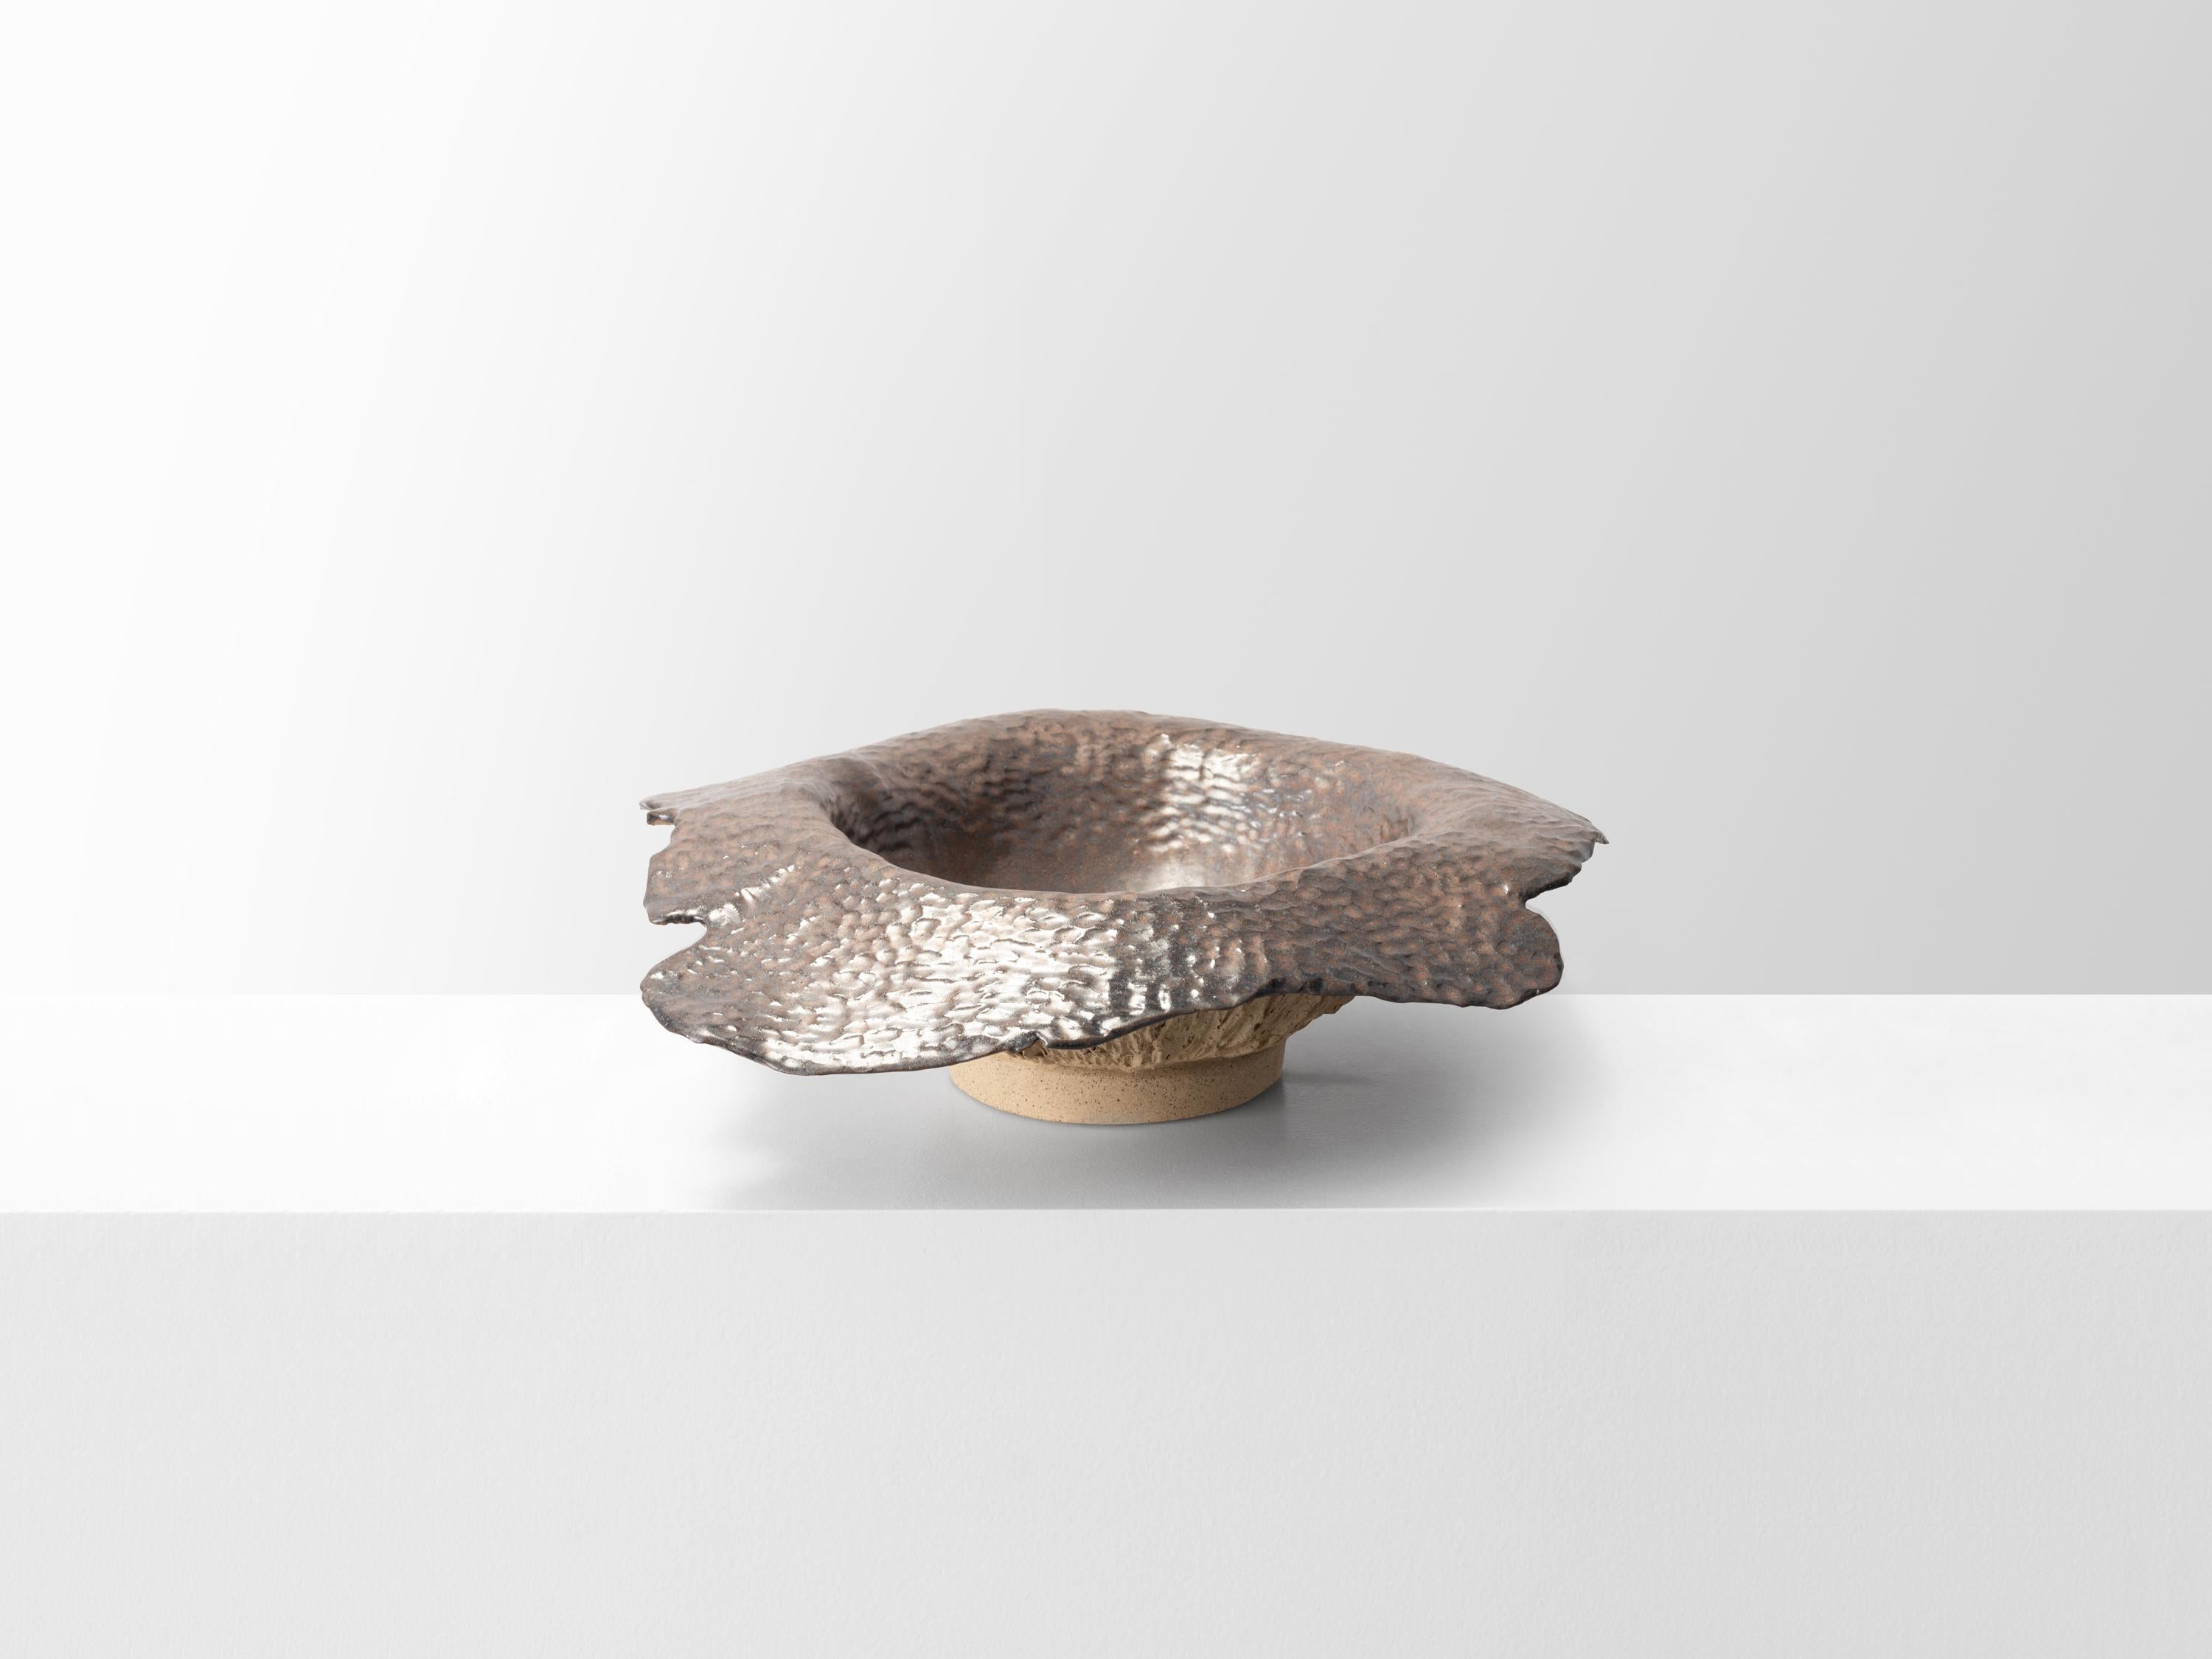 Trish DeMasi
Victoria Bowl, 2022
Metallic glaze and stoneware
5.25 x 21 x 20 in 
Stamped on verso 
